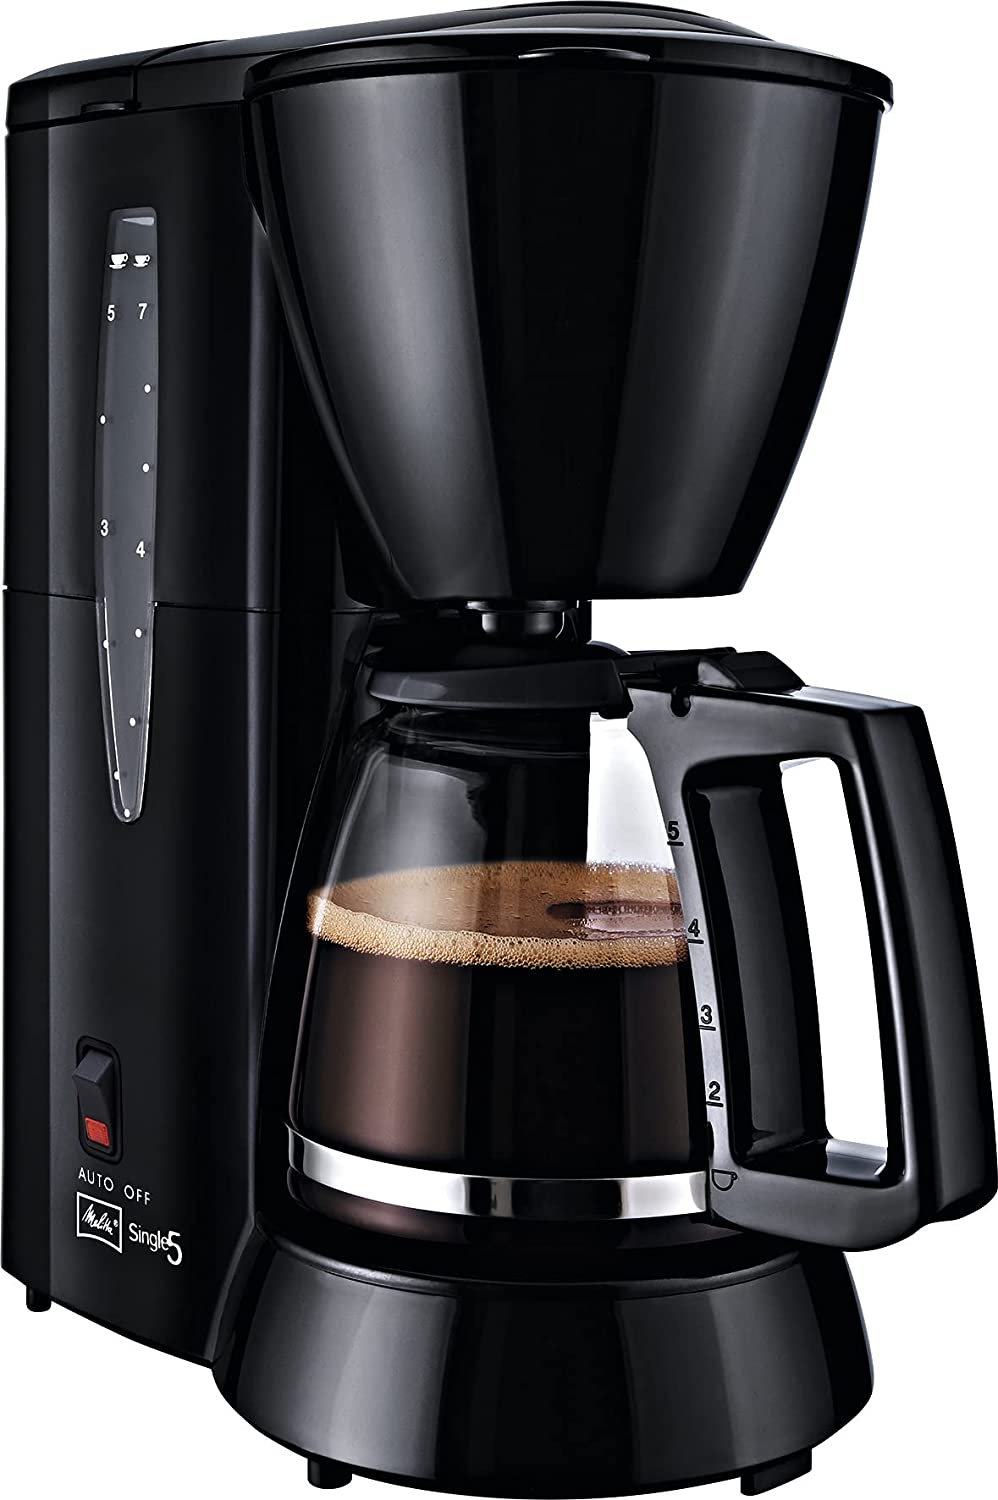 Melitta 720-1 Single Kaffeefiltermaschine 5 M, glass teapot\'s friend, drip stop, Auto power off black